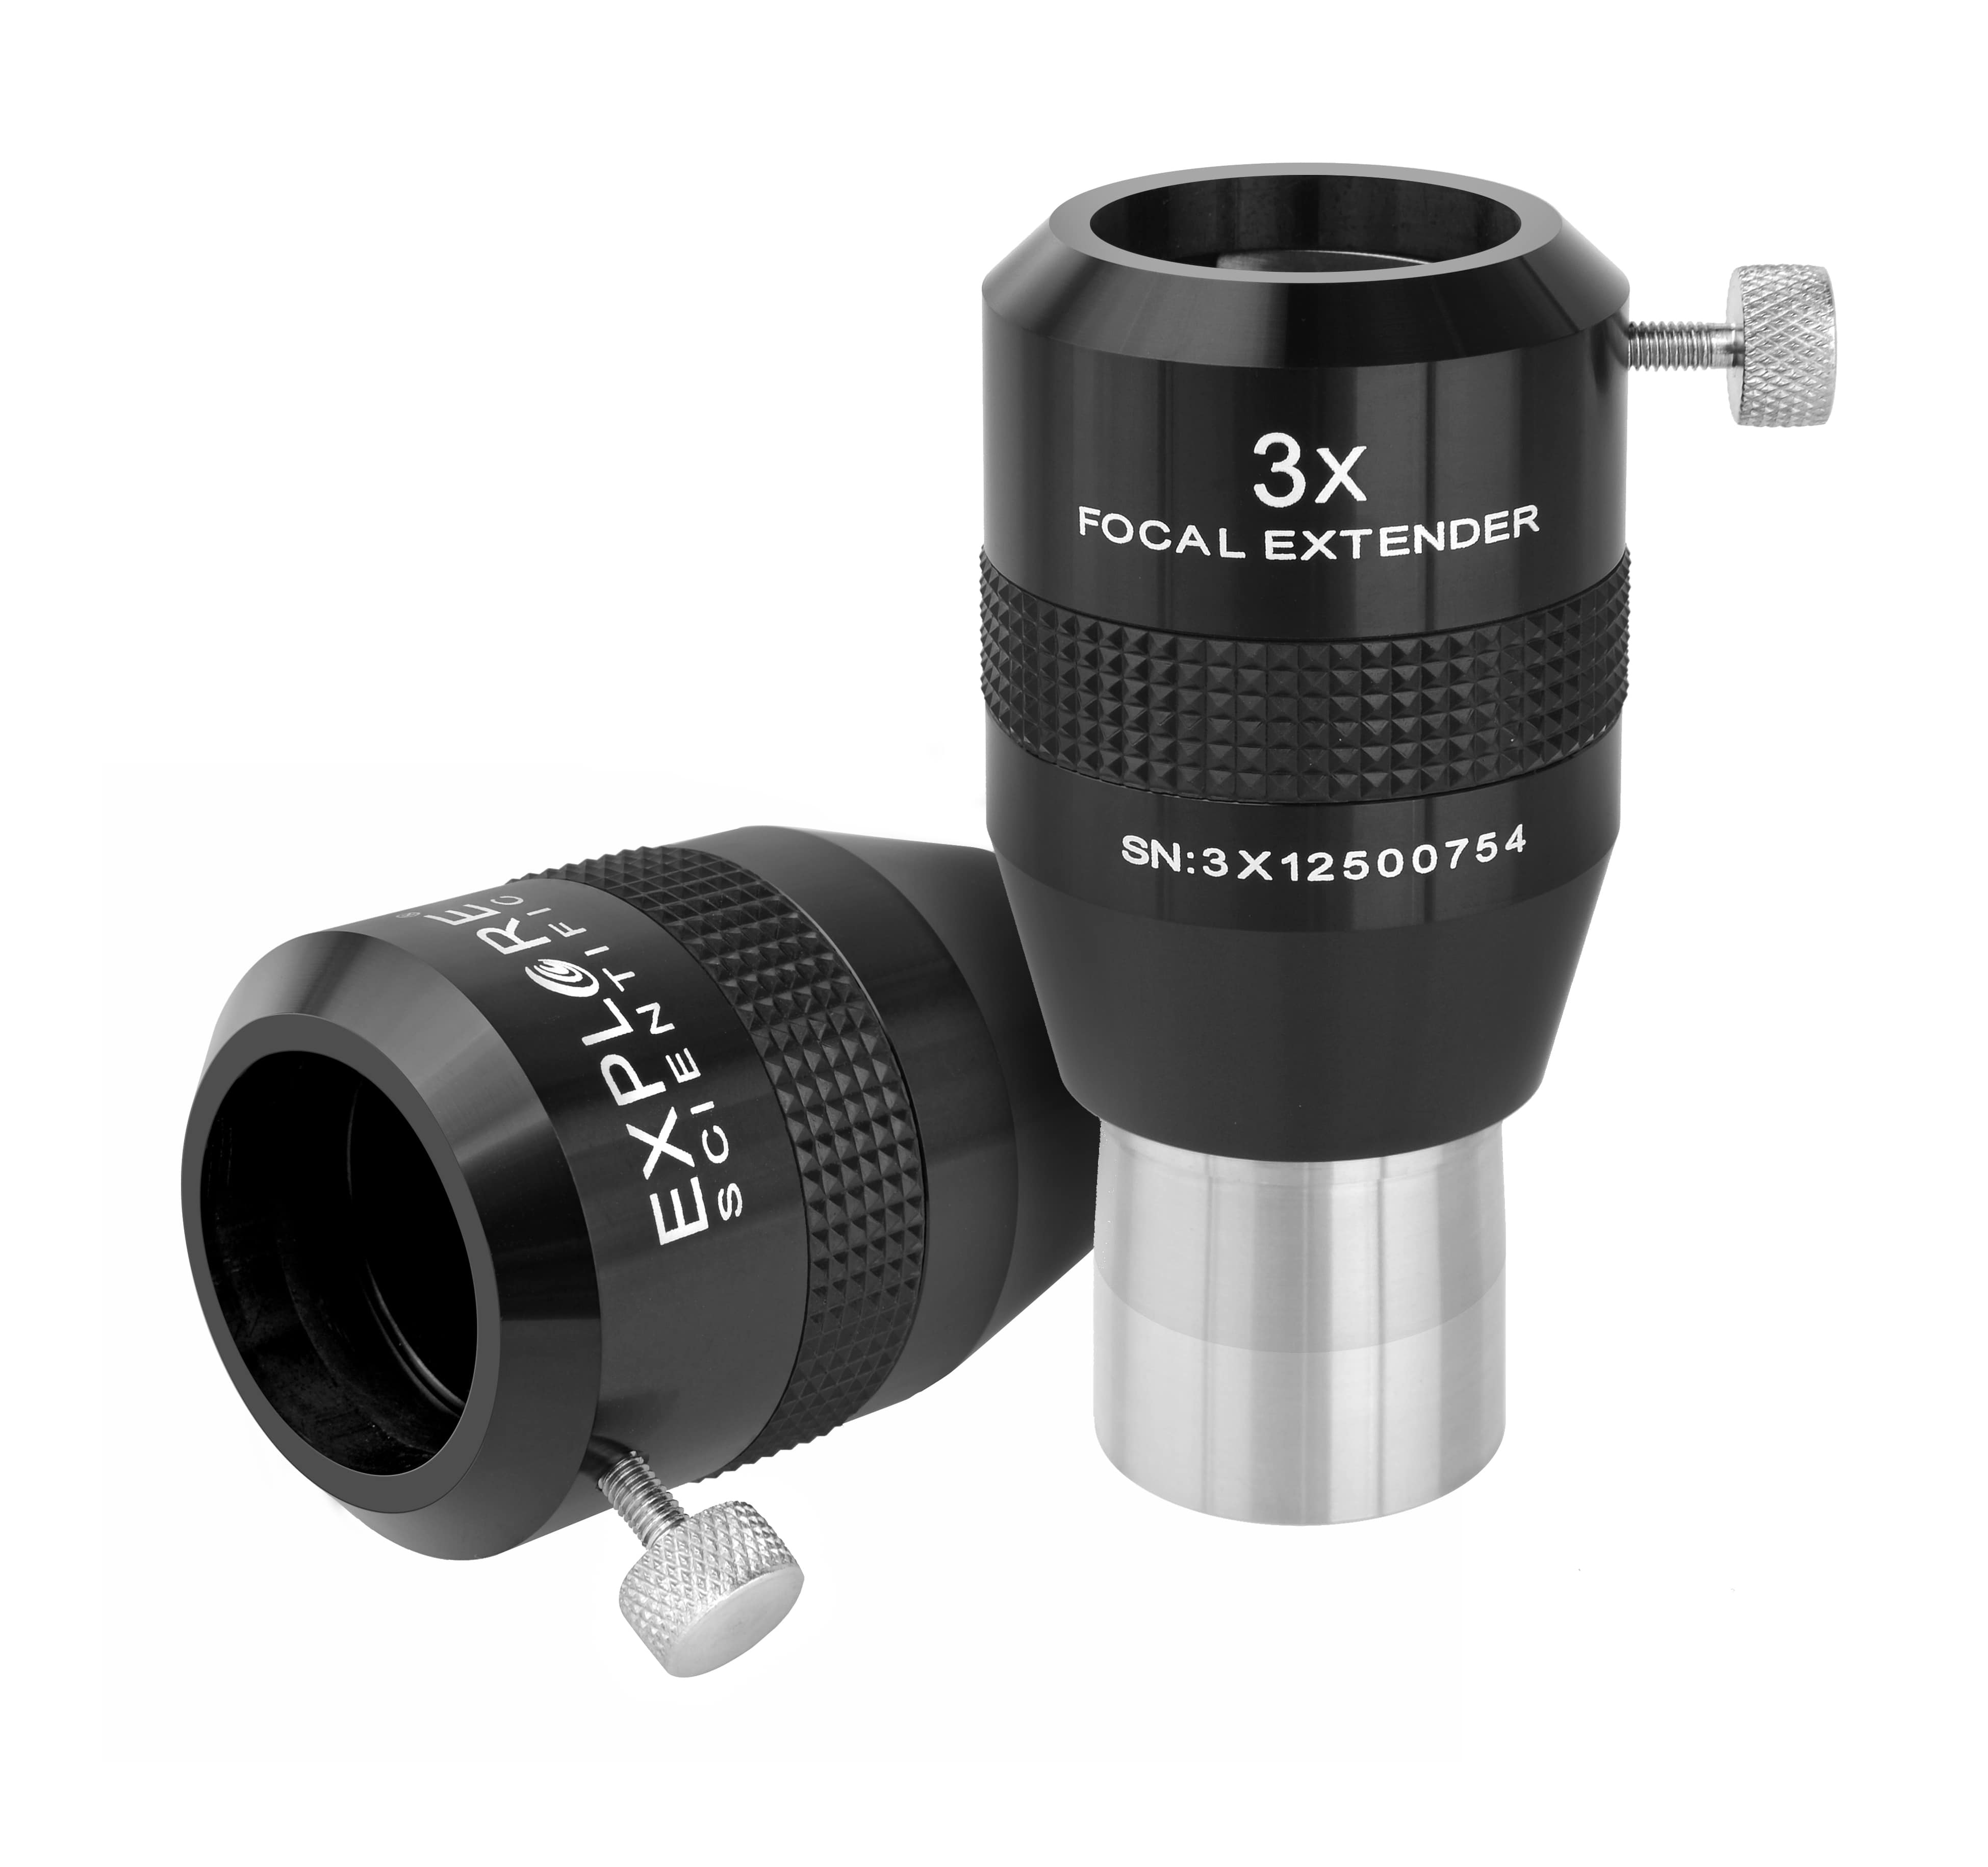   Four-lens Premium-Teleextender with extension factor 3x [EN]  